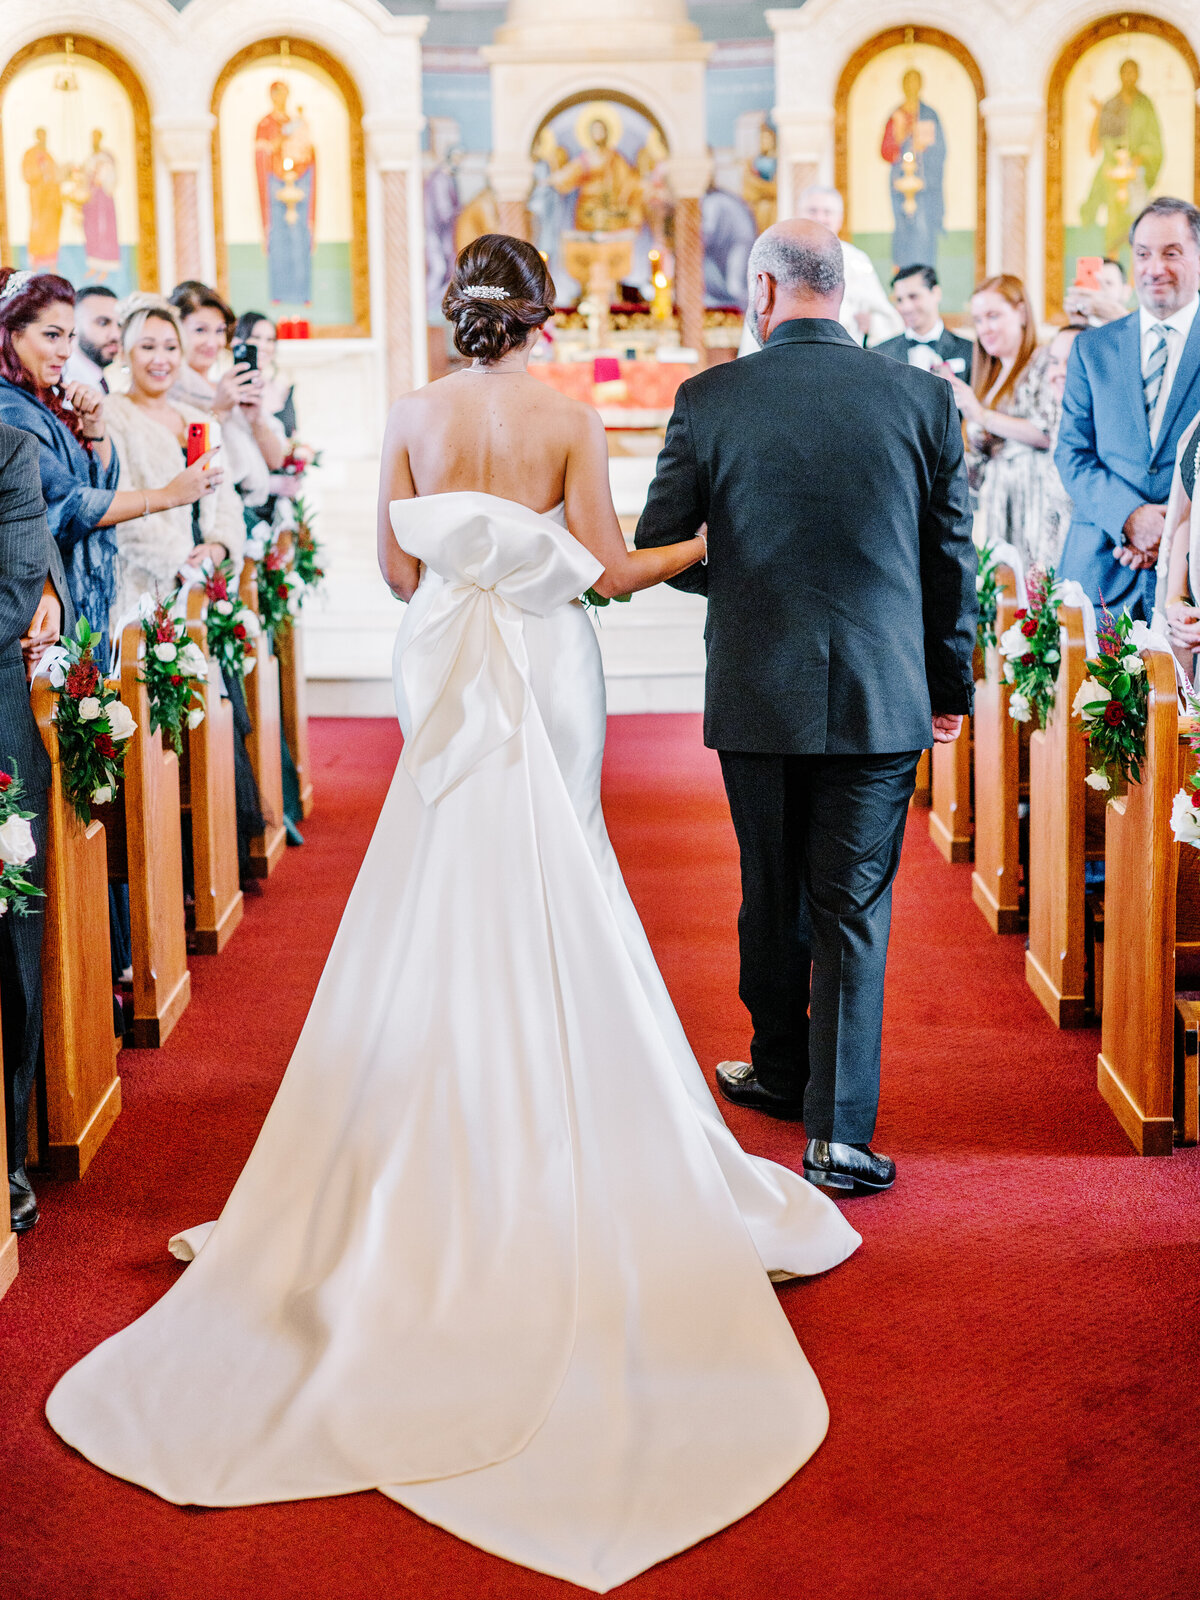 Event-Planning-DC-Wedding-Saint-Peter-&-Paul-Antiochian-Church-Potomac-MD-Anna-&-Mateo-bride-dad-aisle